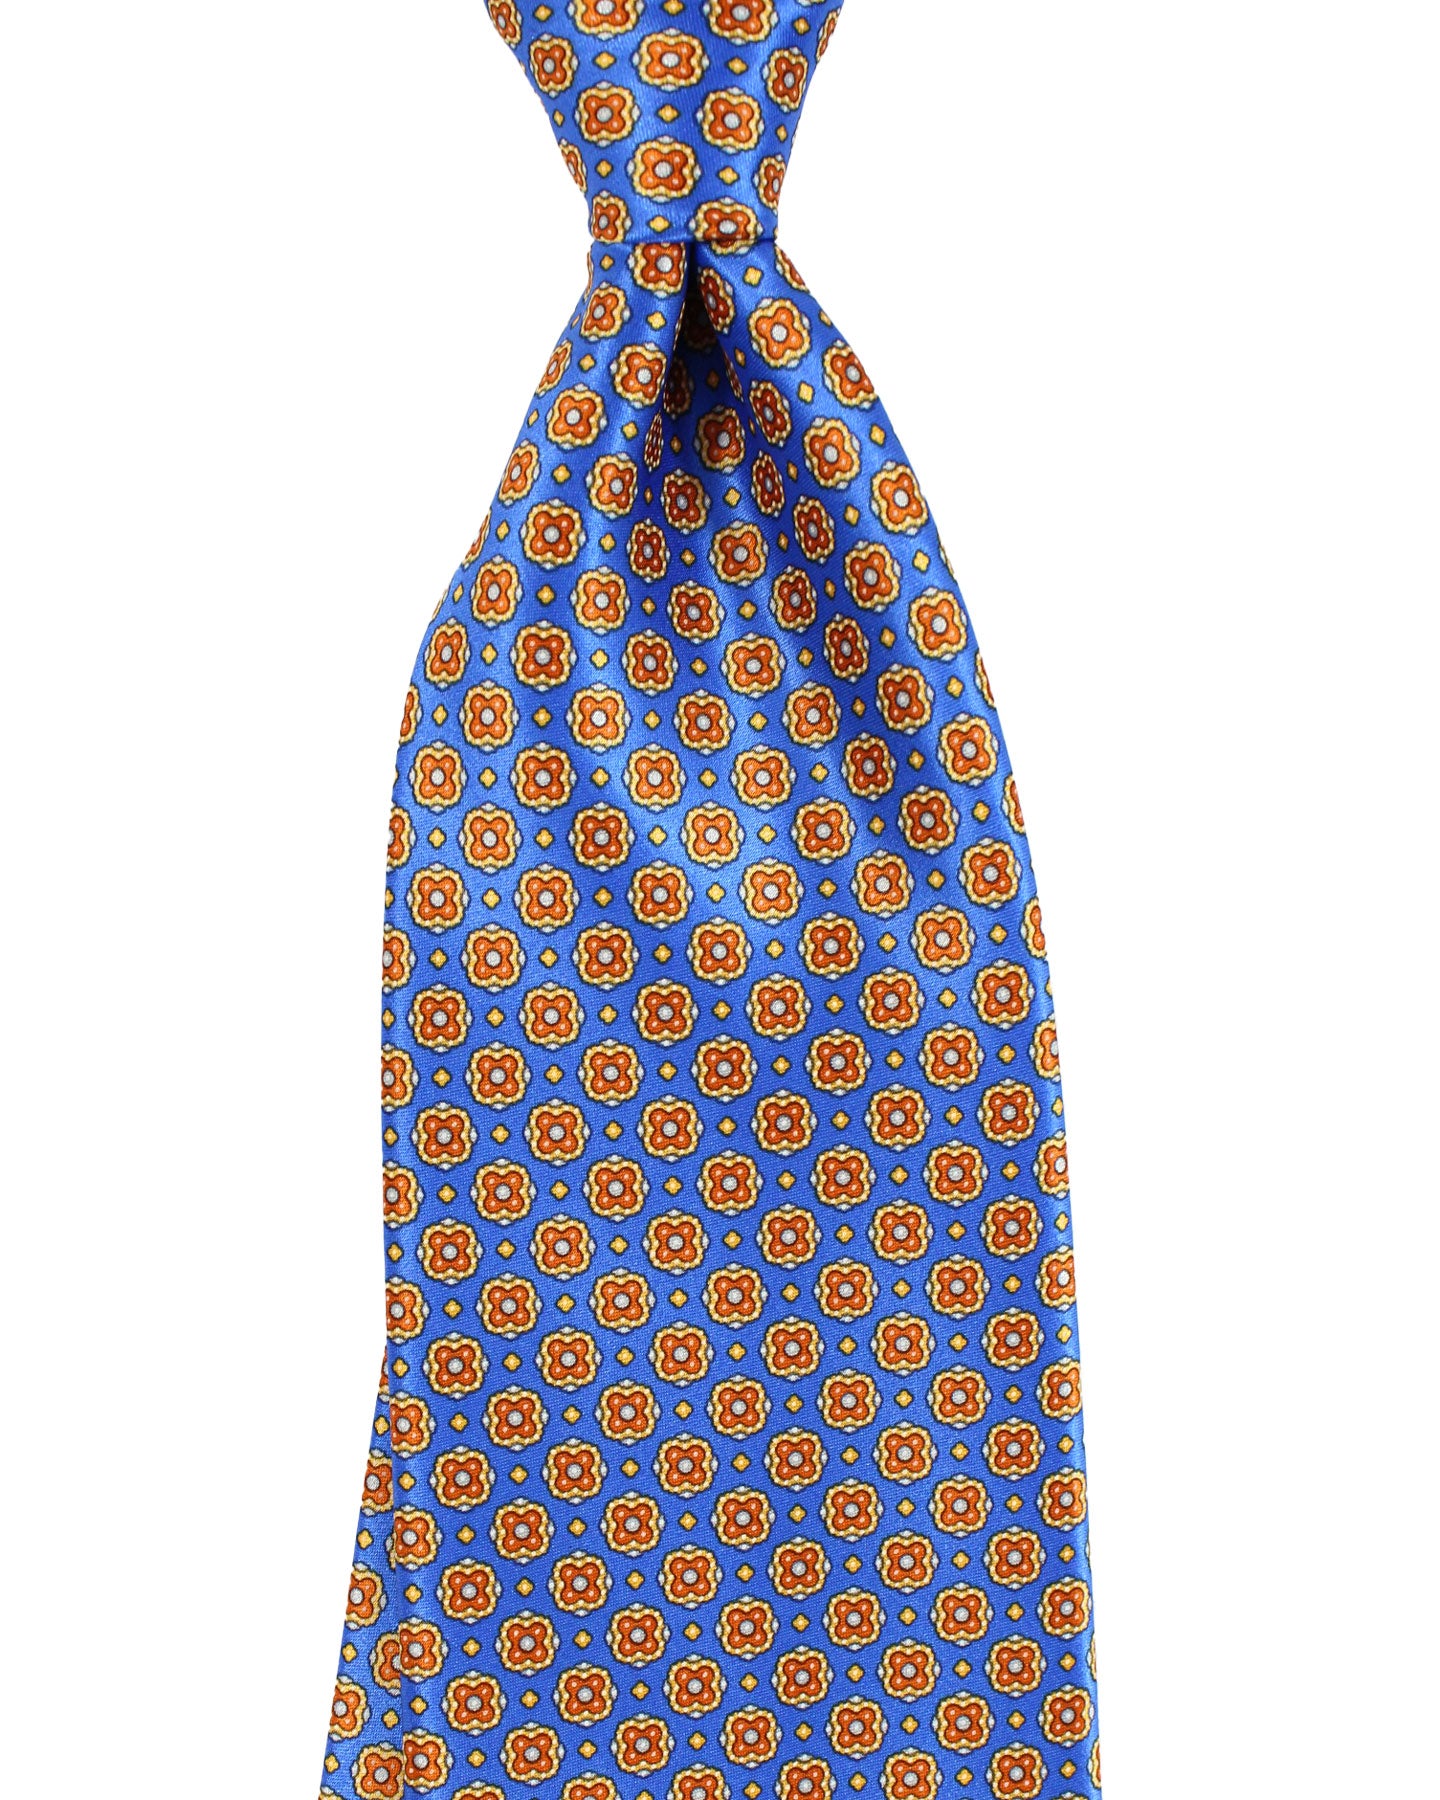 Stefano Ricci Silk Tie Royal Blue Orange Geometric